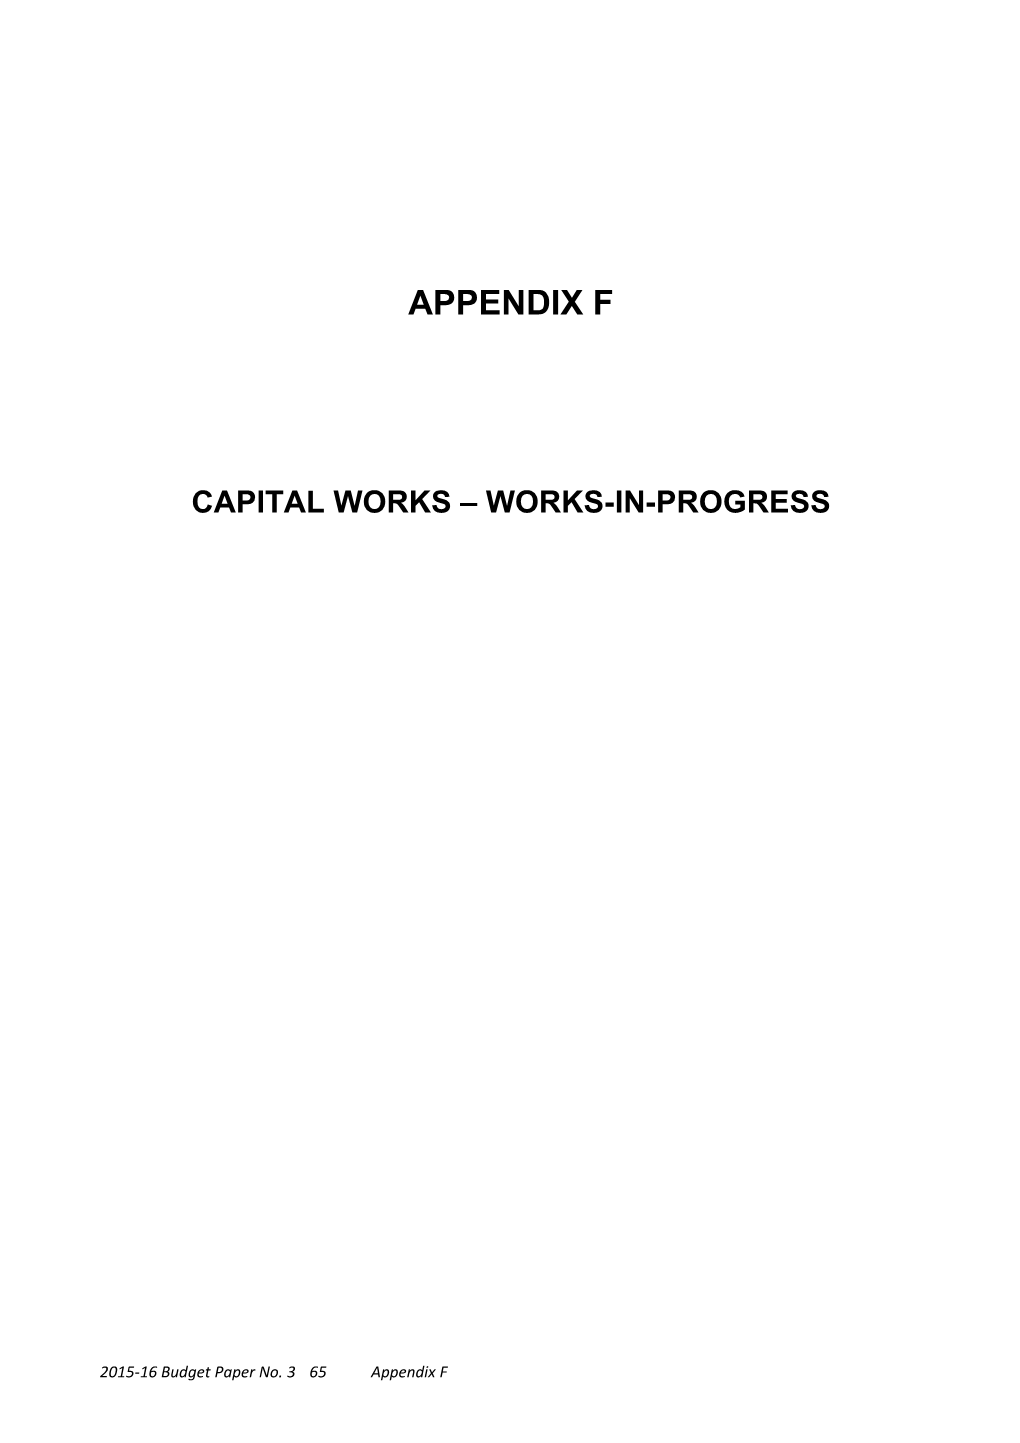 Appendix F: CAPITAL WORKS WORKSINPROGRESS